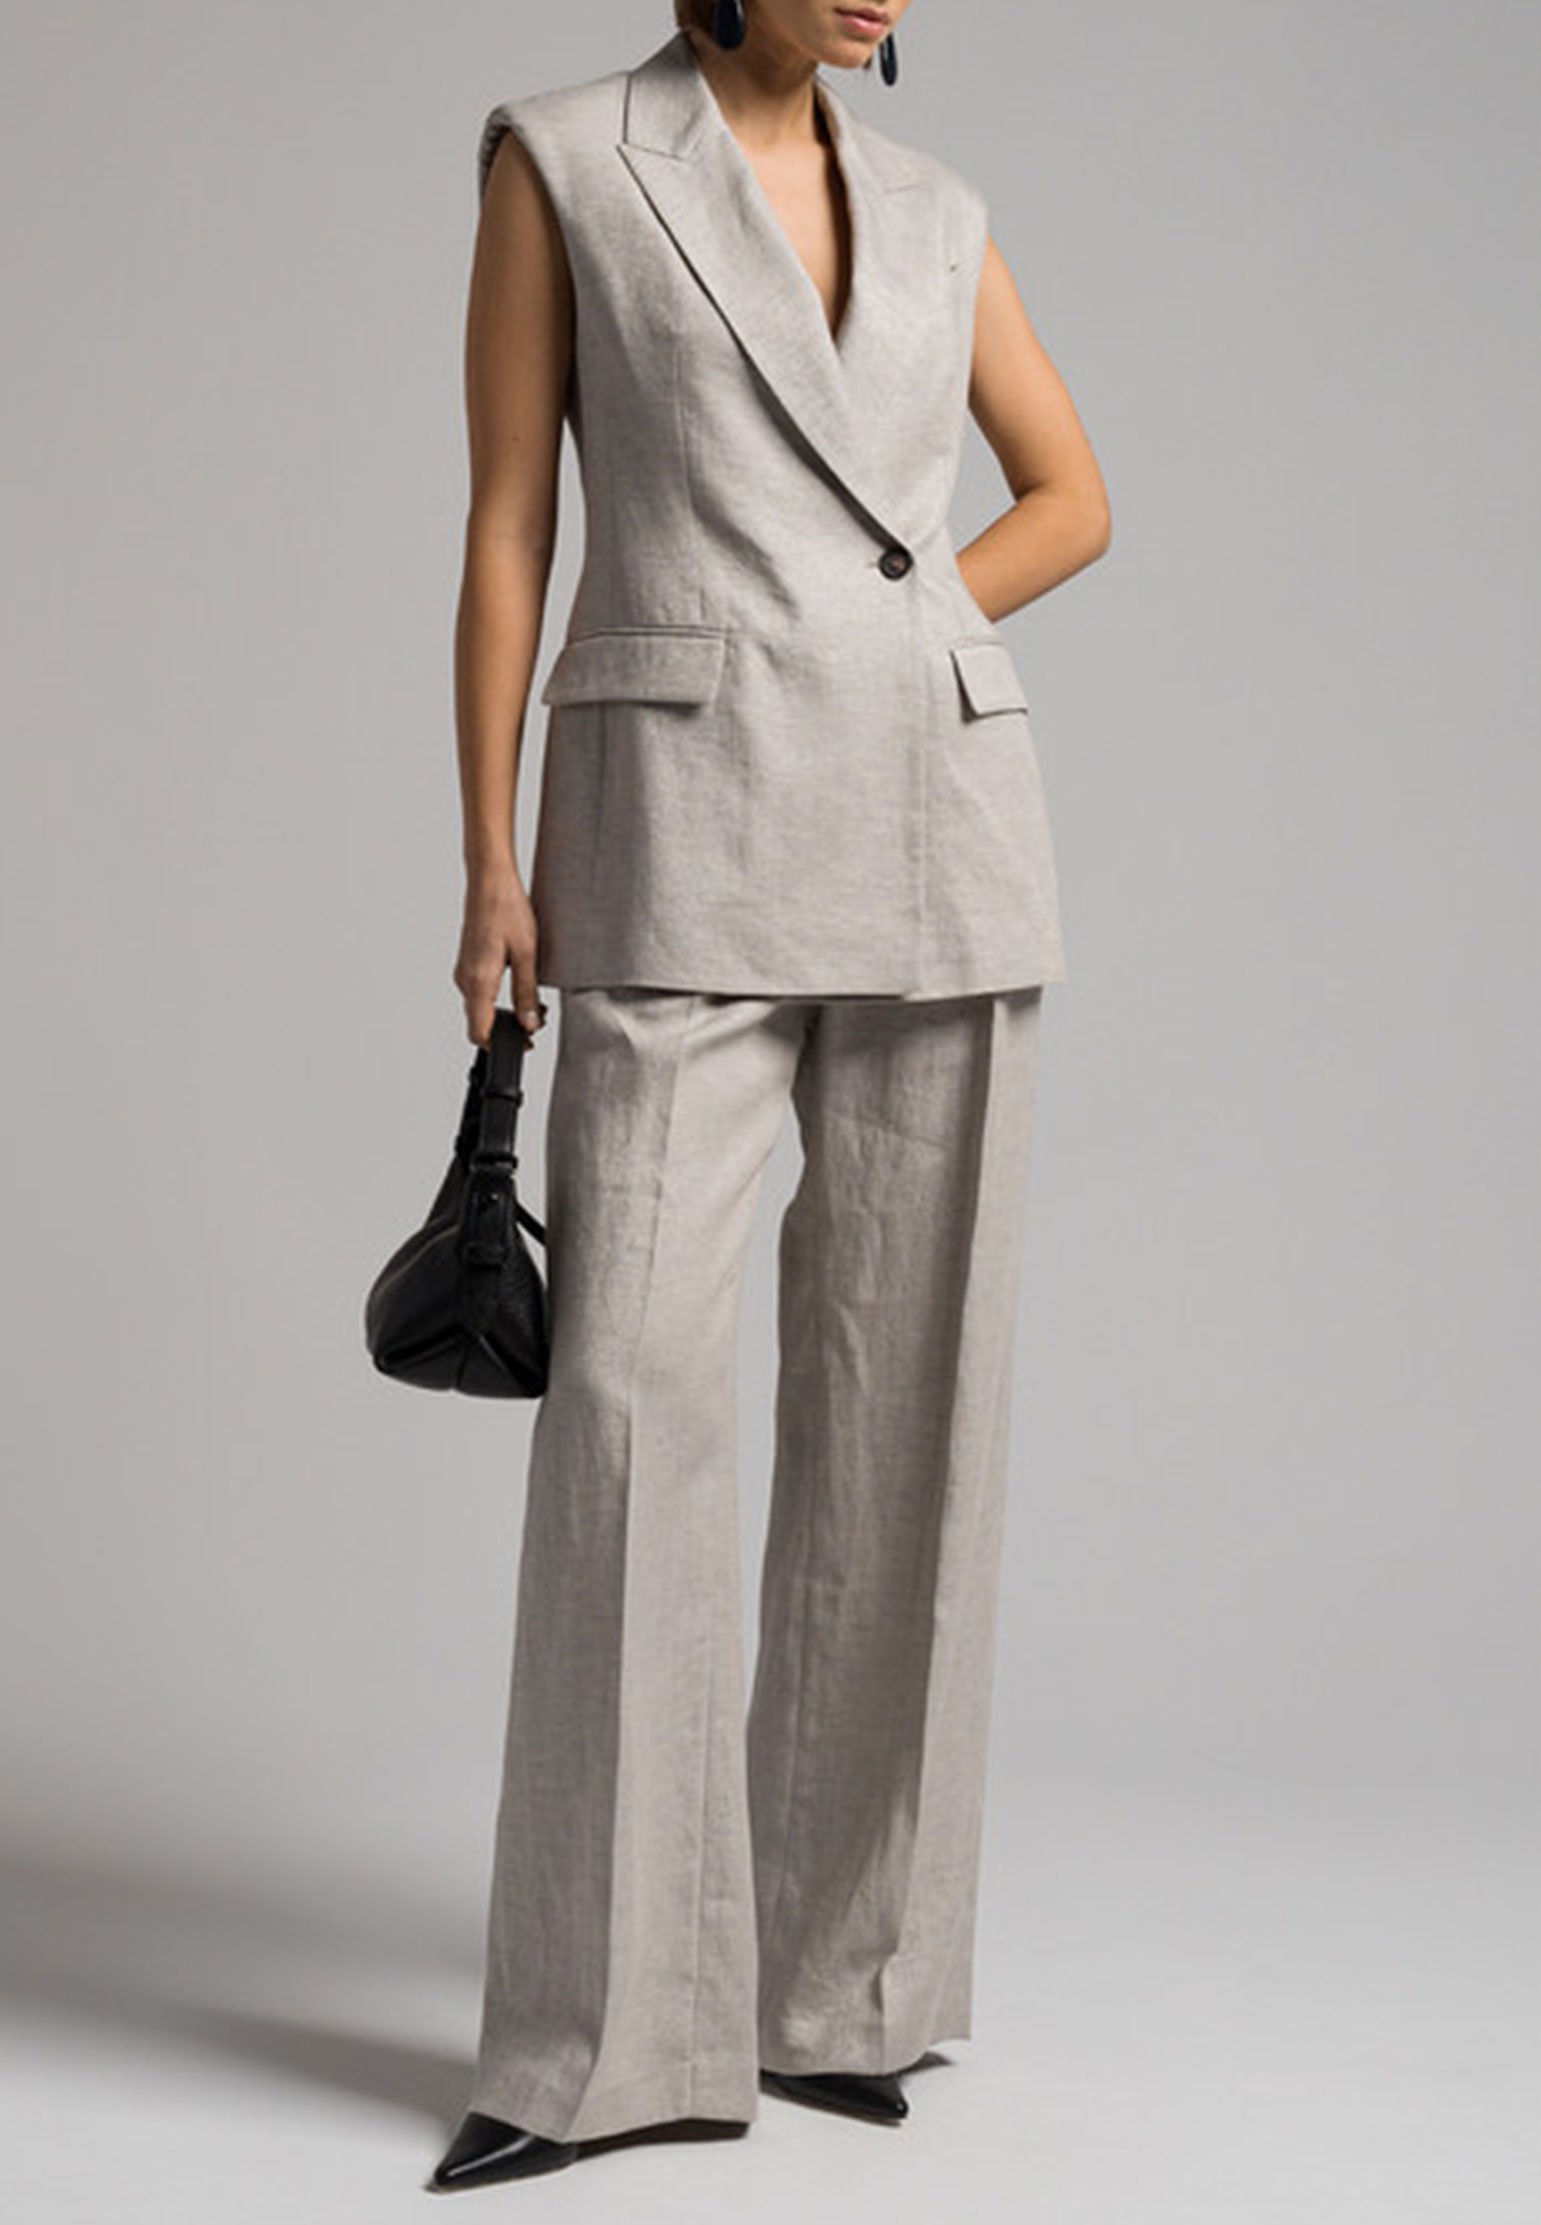 Vest BRUNELLO CUCINELLI Color: grey (Code: 3968) in online store Allure